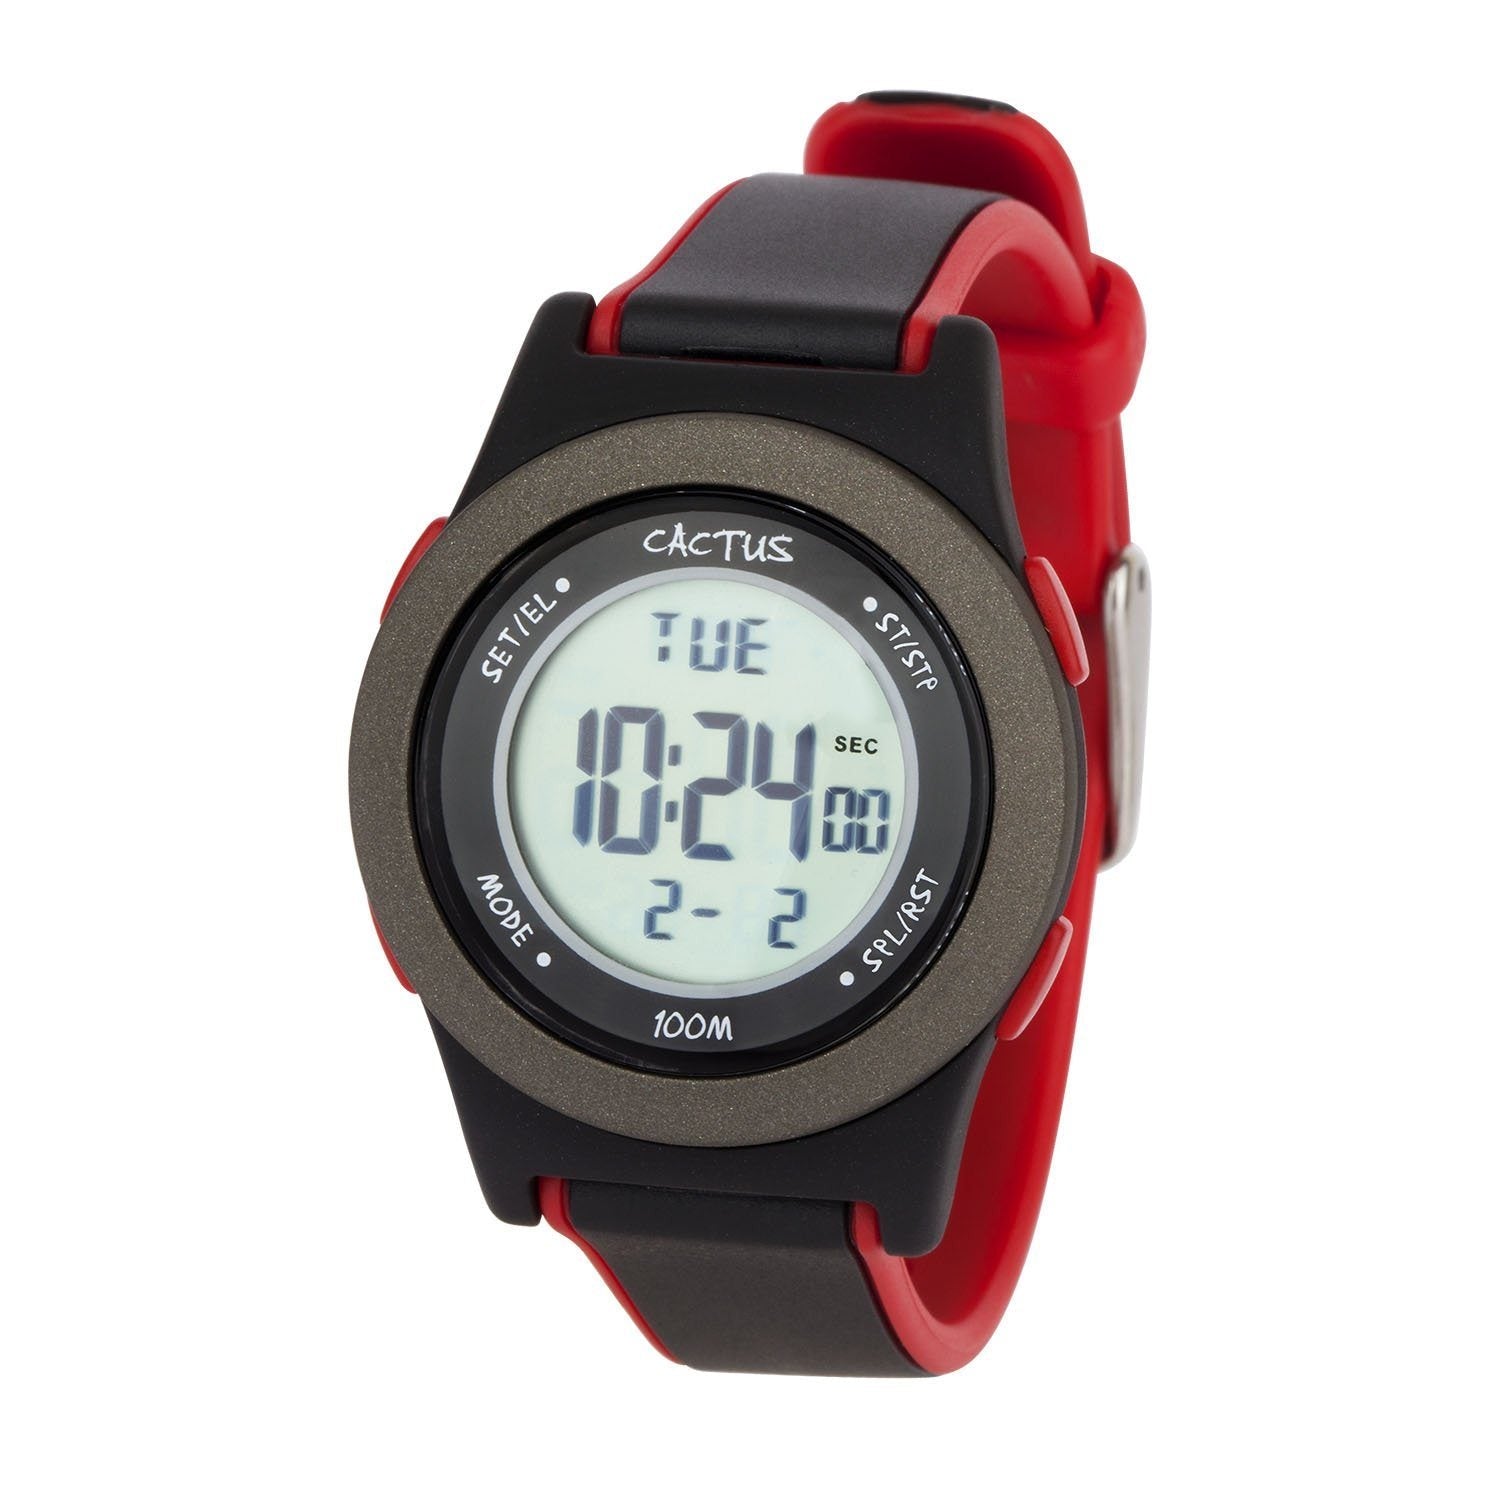 CACTUS Watches -Shine - Digital Kids Watch - Black / Red trim - CAC-125-M01